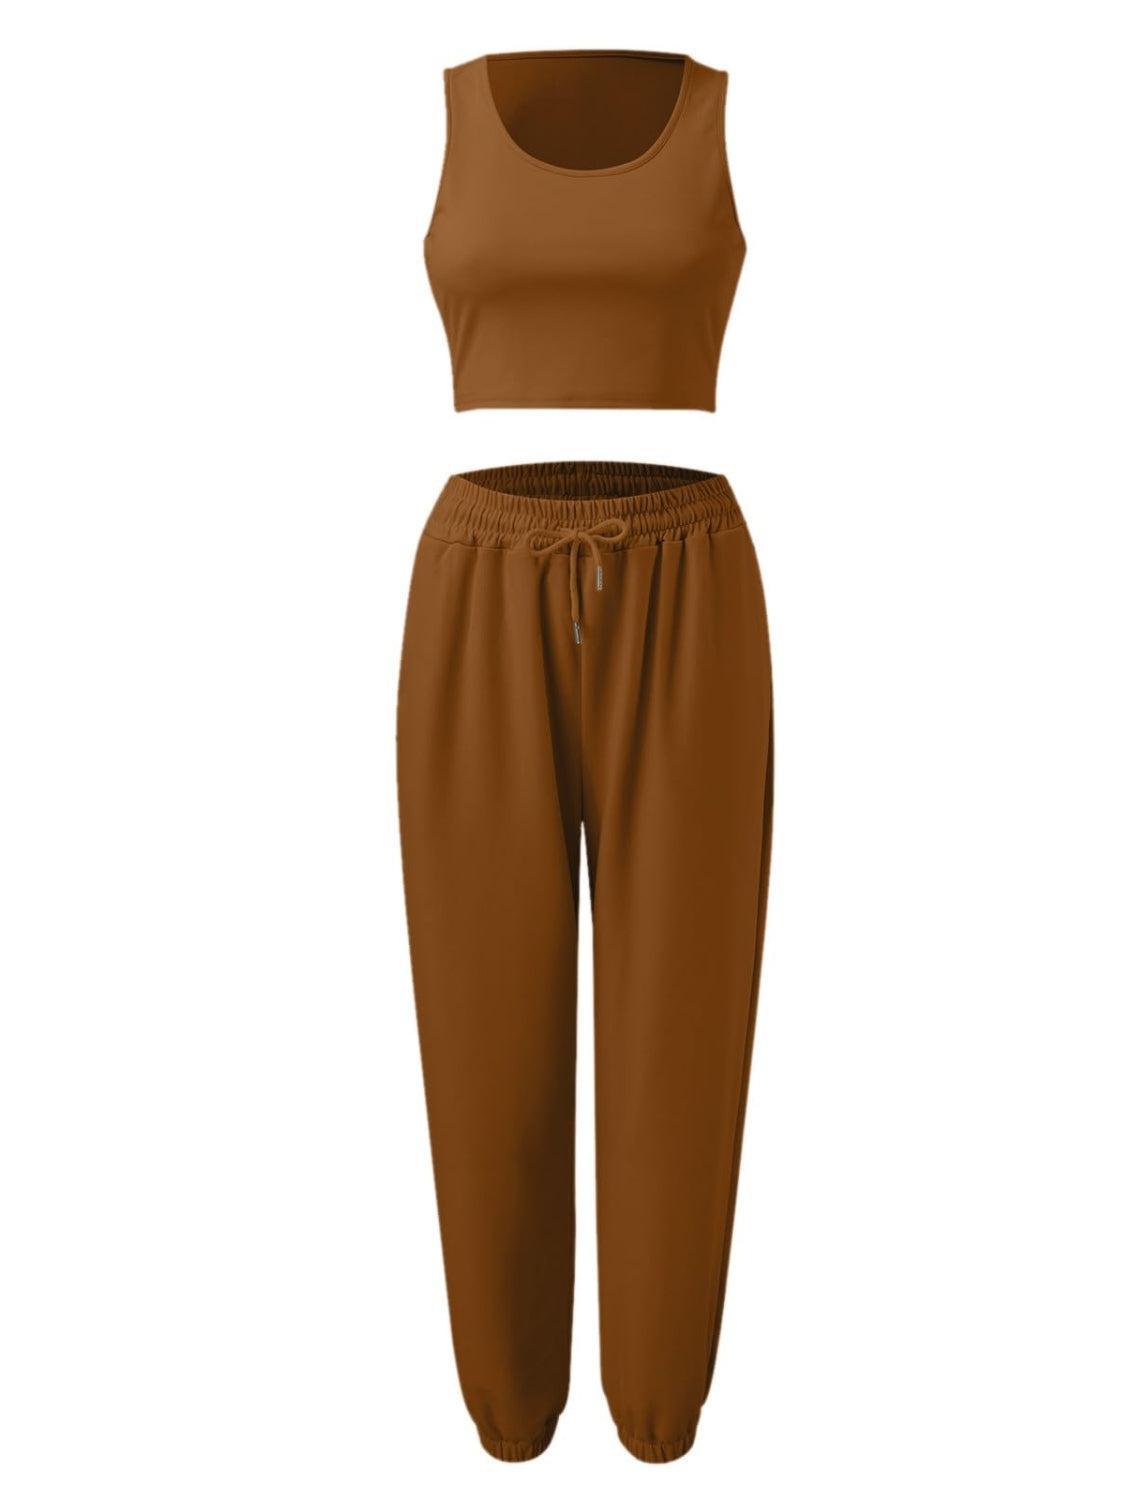 a women's crop top and pants set